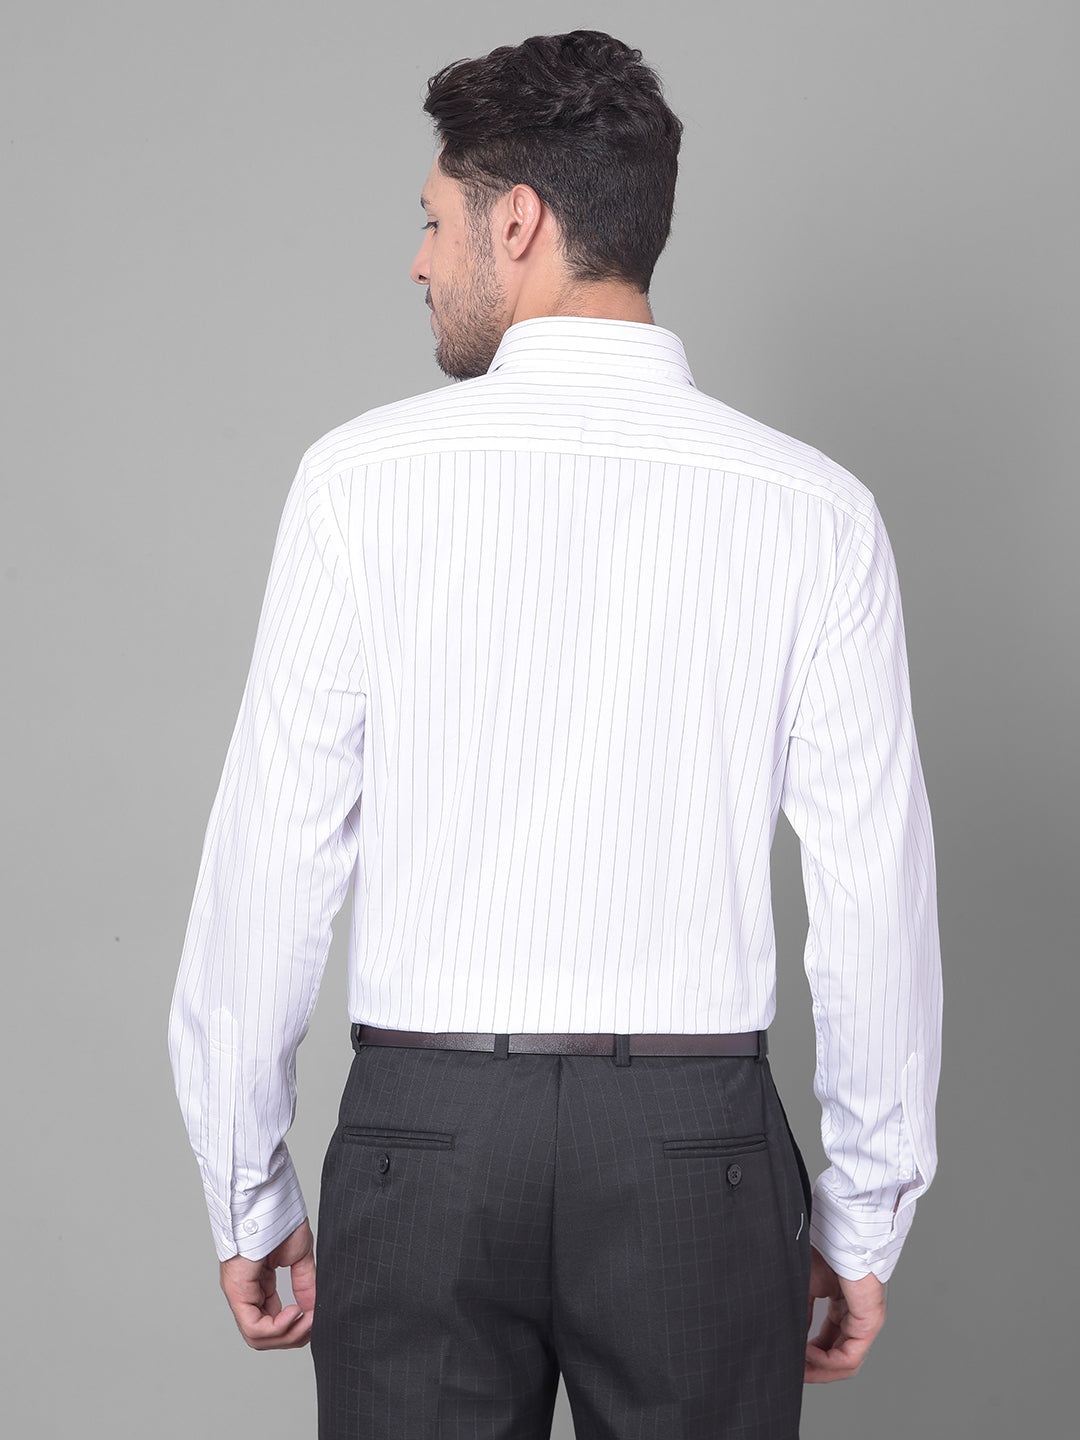 Cobb White Striped Shirt Collar Formal Shirt